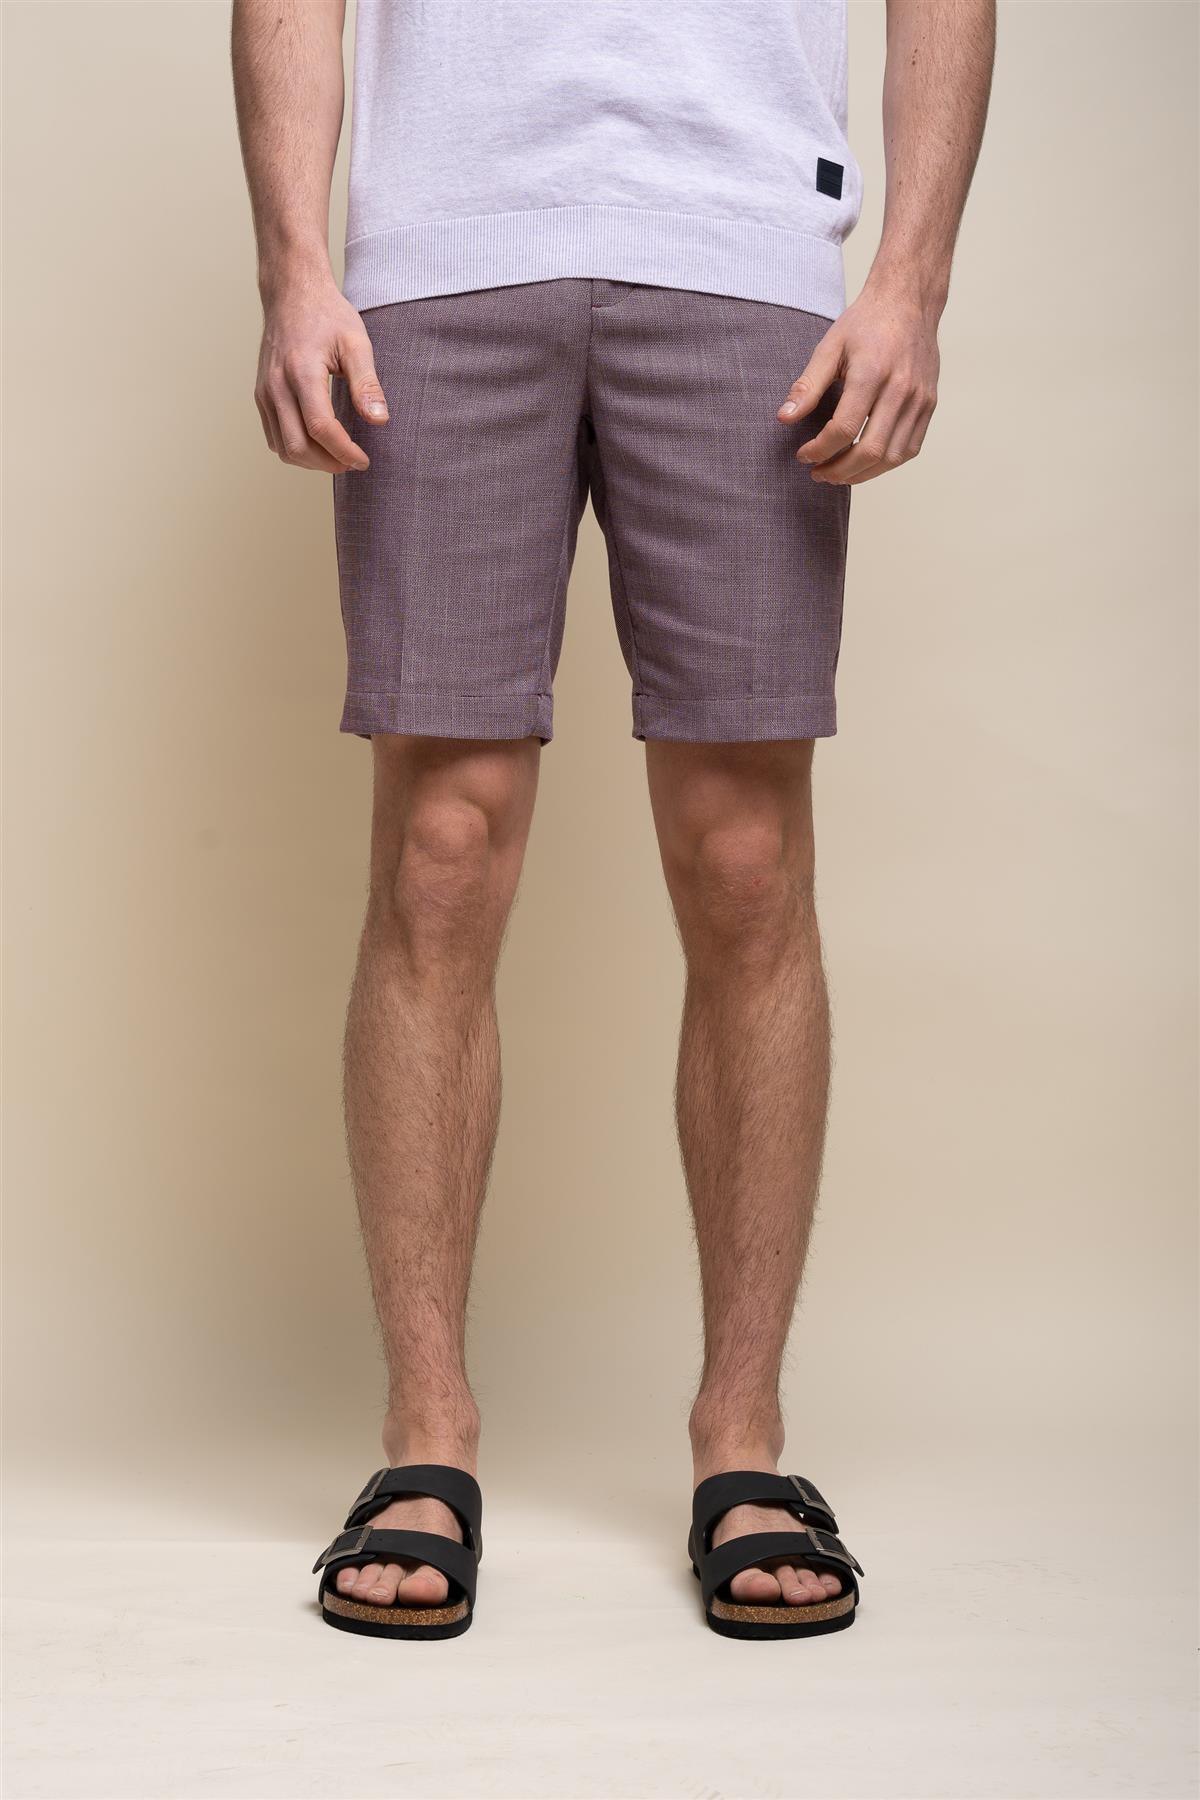 Miami lilac shorts front